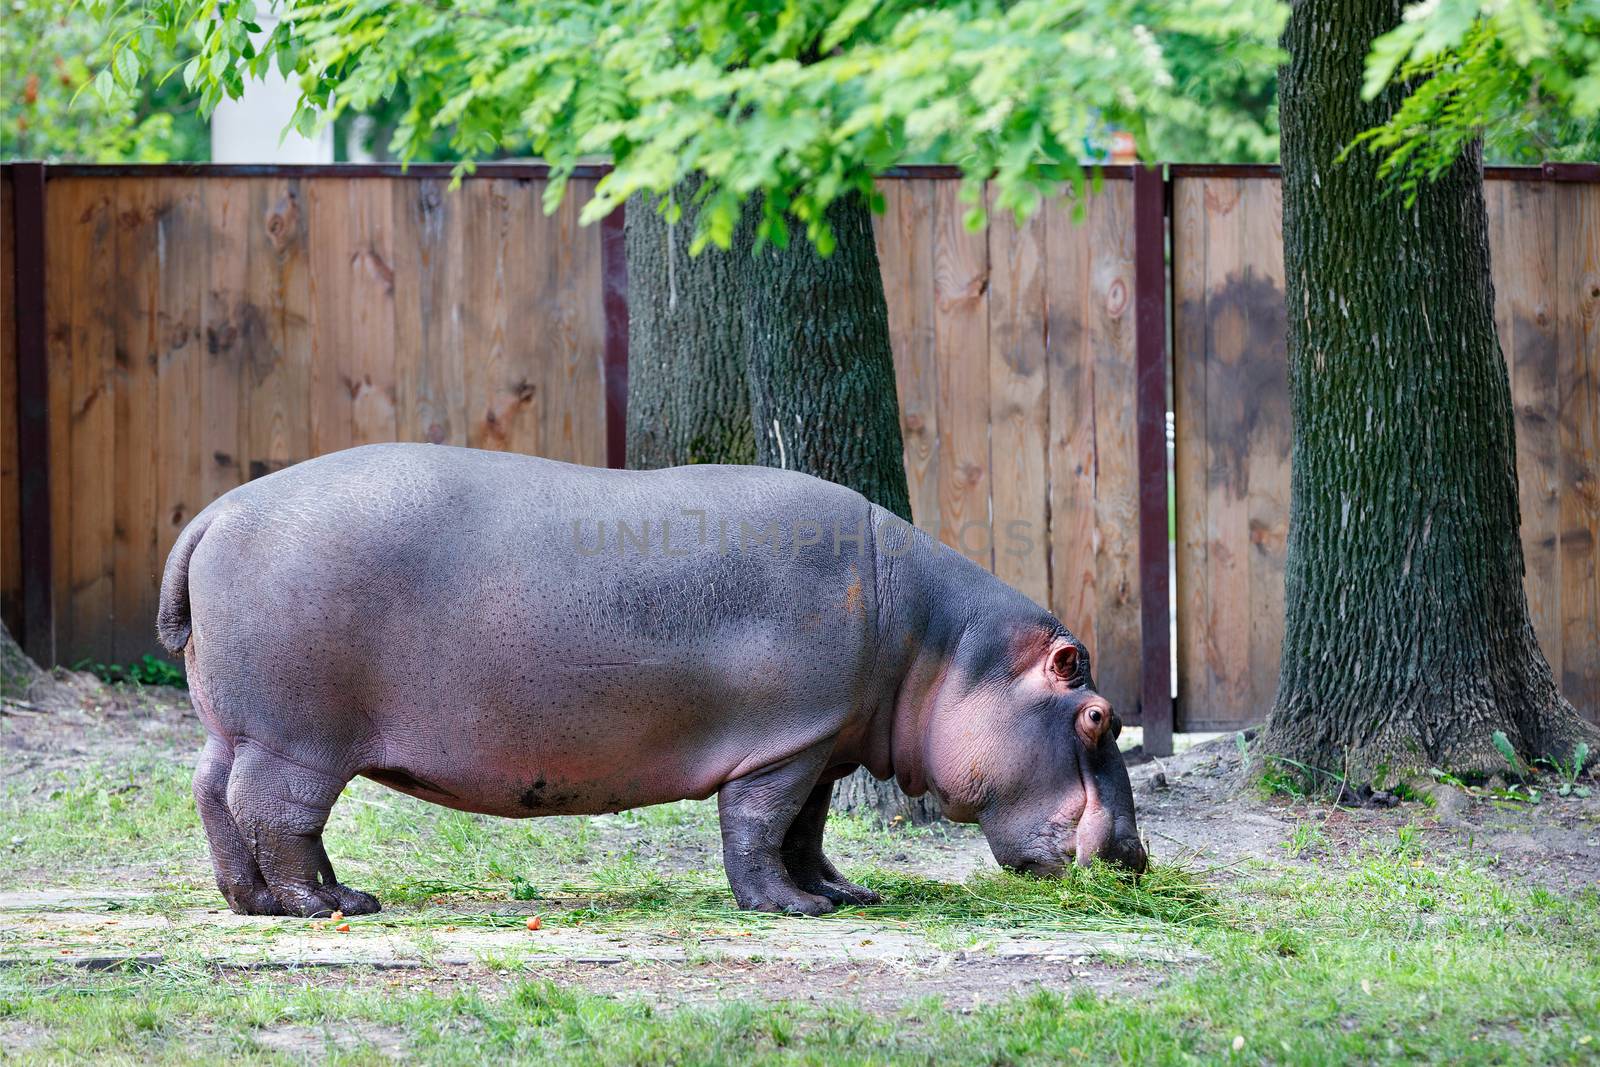 A large hippopotamus is a herbivorous, semi-aquatic mammal, dines with green grass near large oaks.